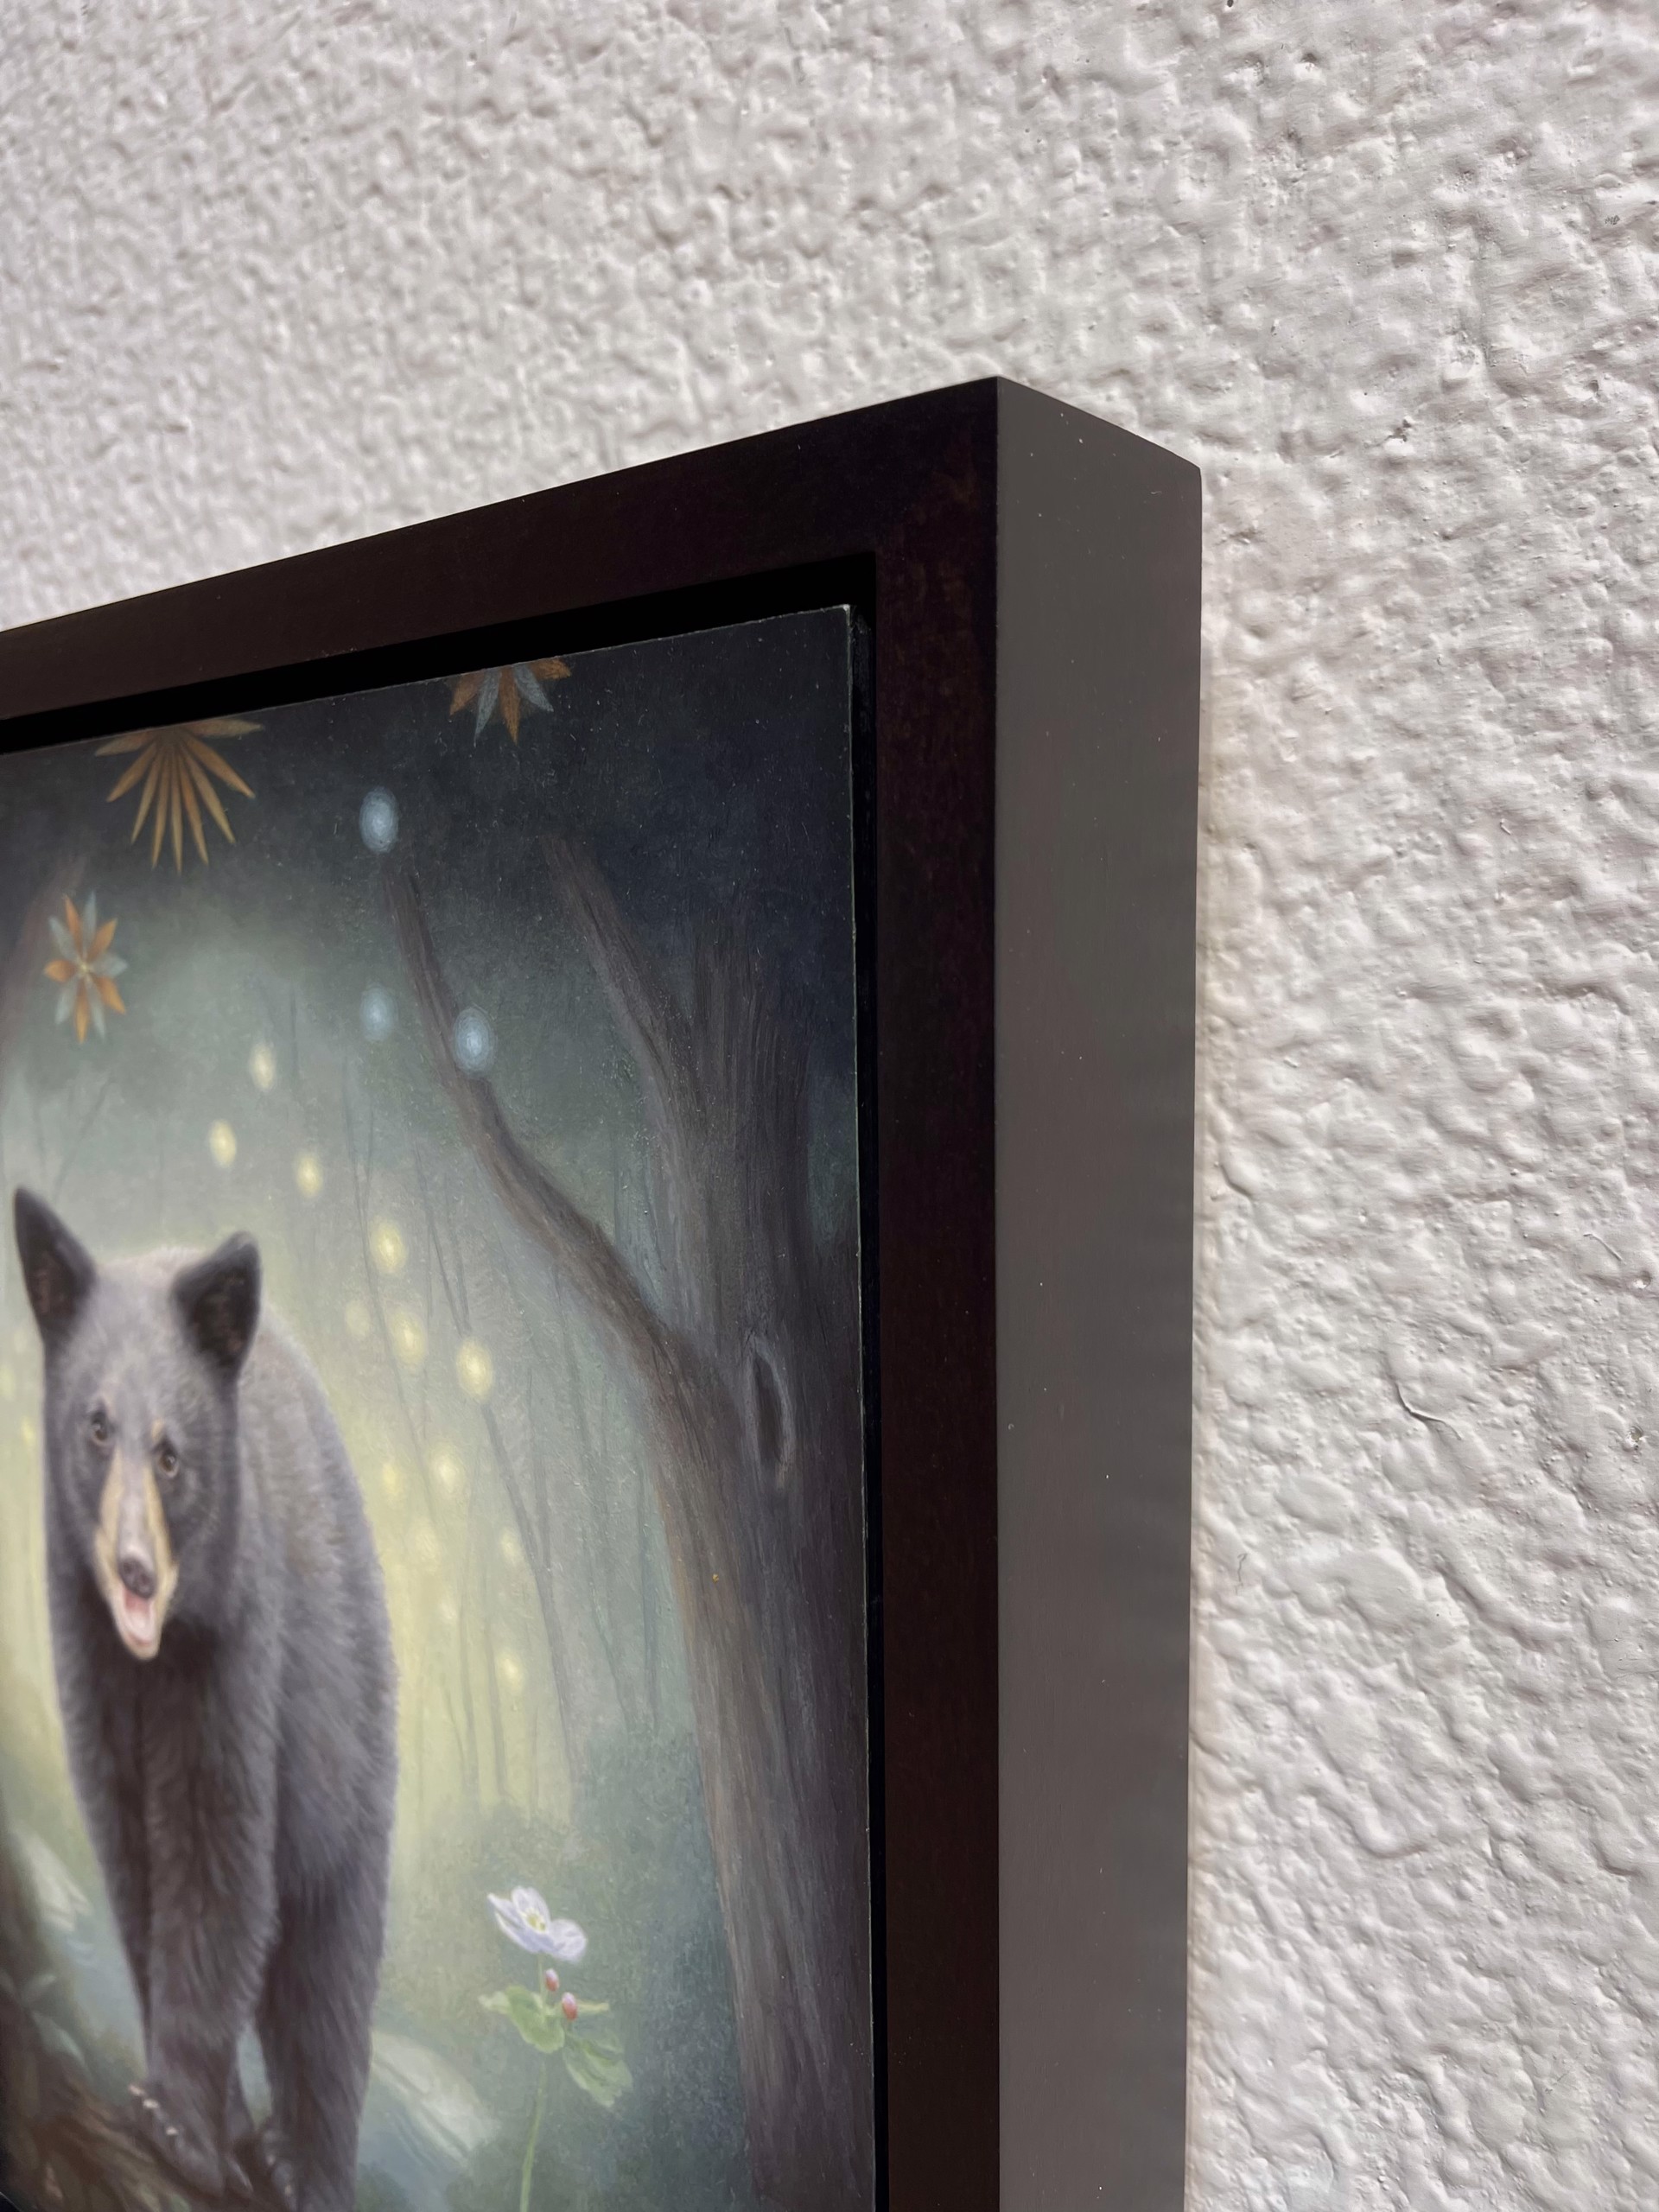 Little Bear by Susan McDonnell